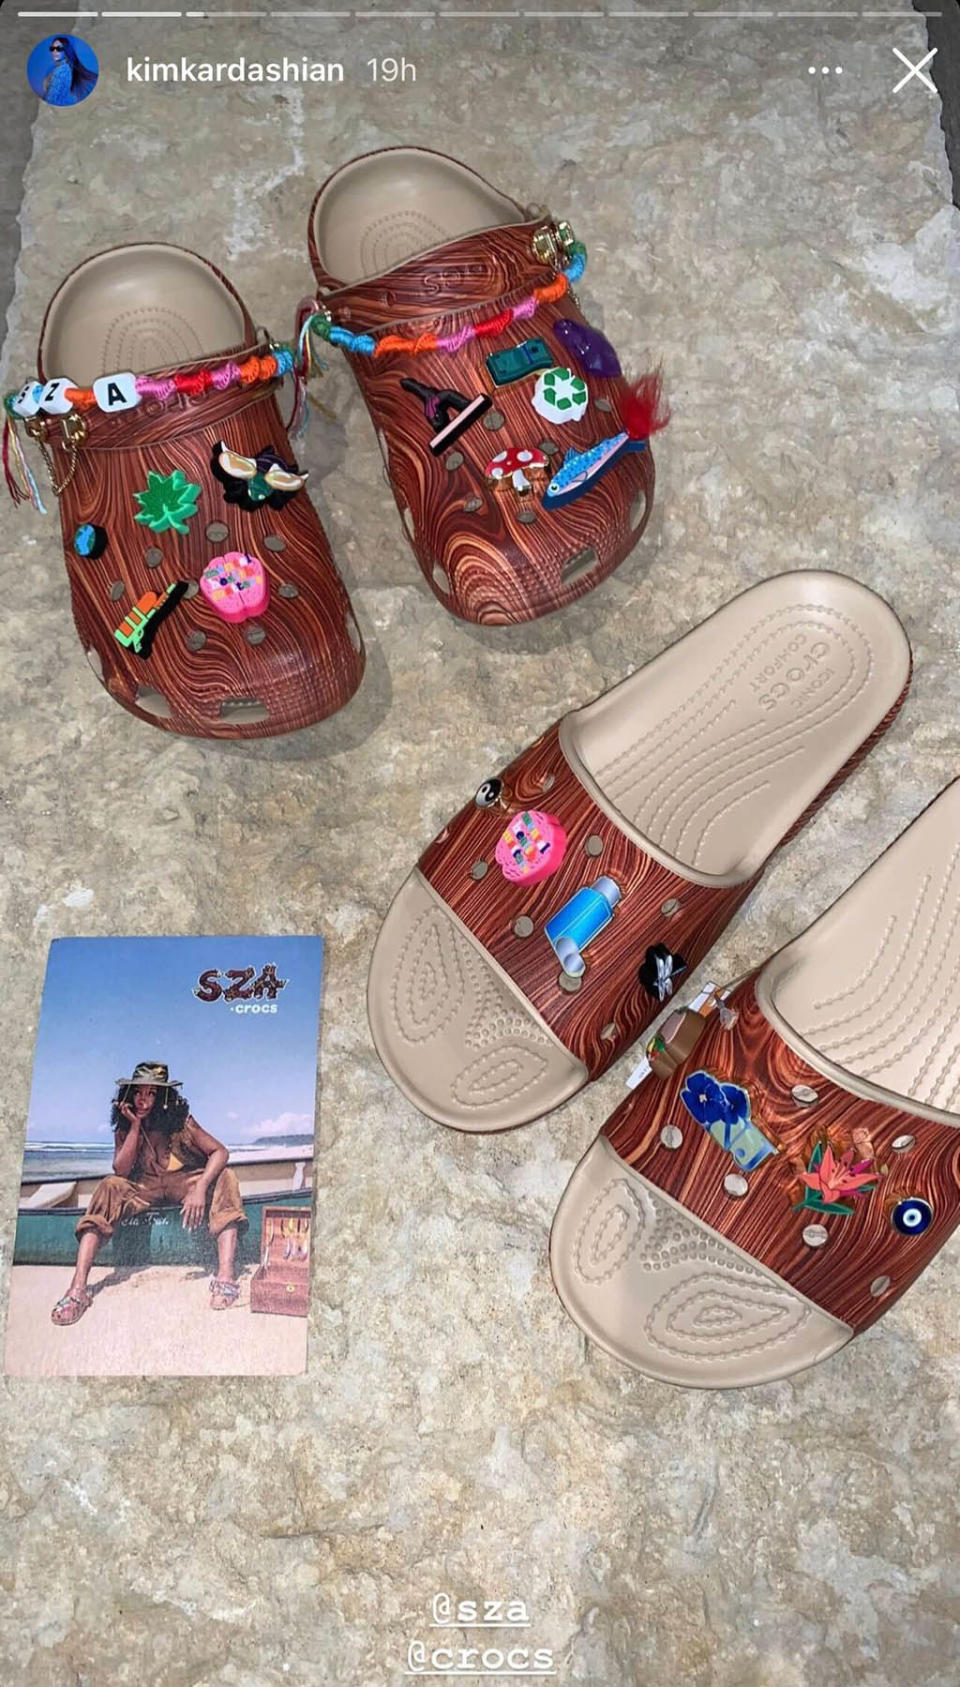 SZA x Crocs collaboration via Kim Kardashian Instagram story on April 28, 2022. - Credit: Courtesy of Kim Kardashian